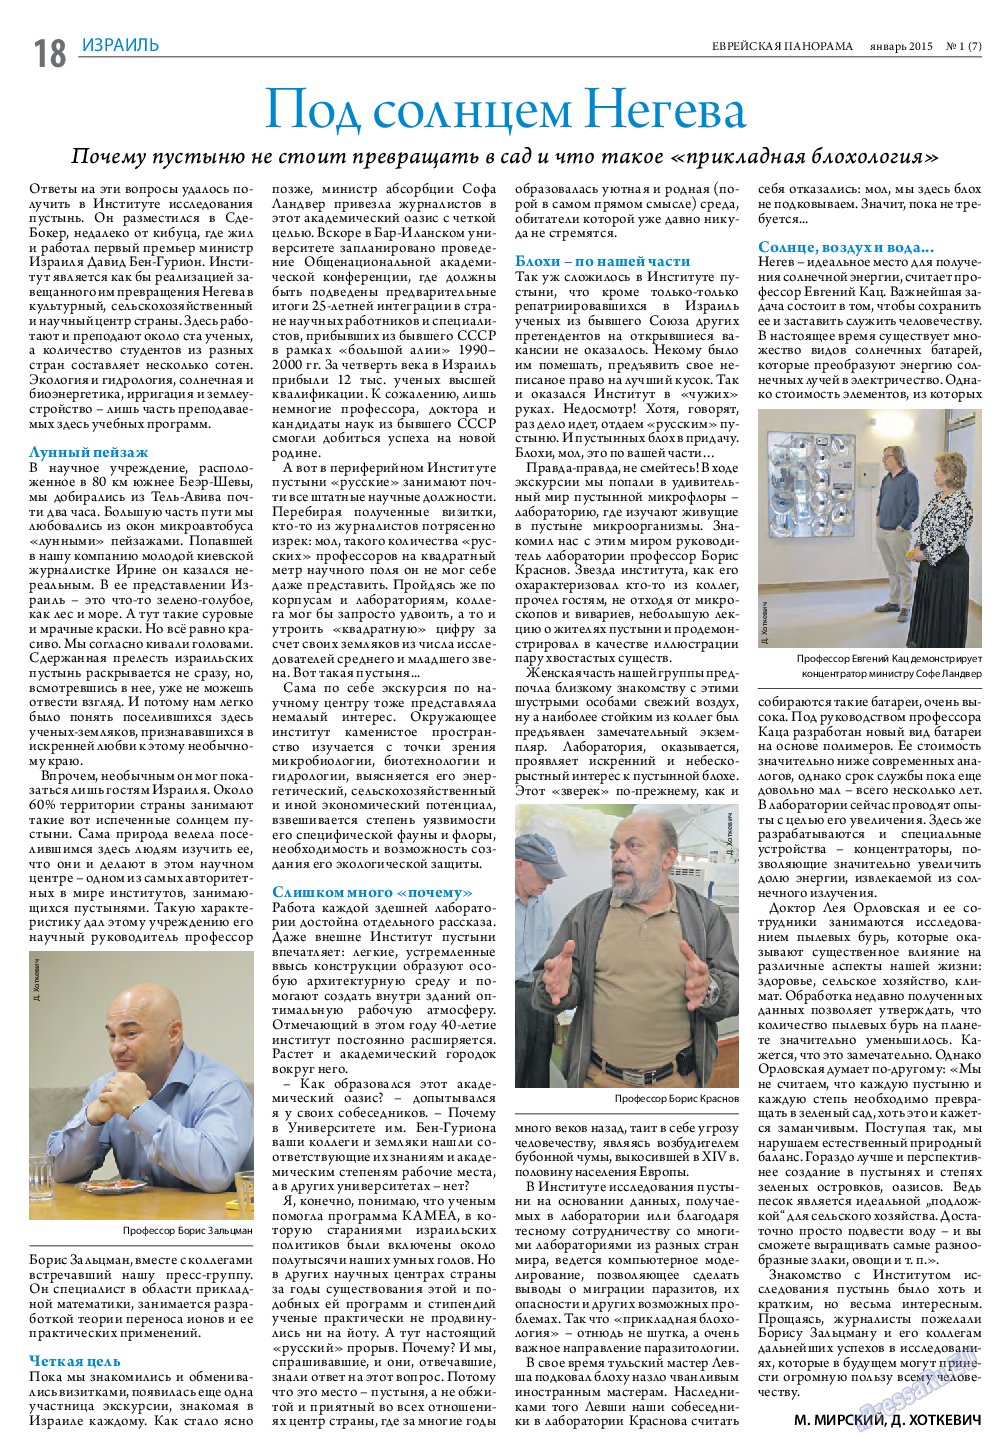 Еврейская панорама, газета. 2015 №1 стр.18